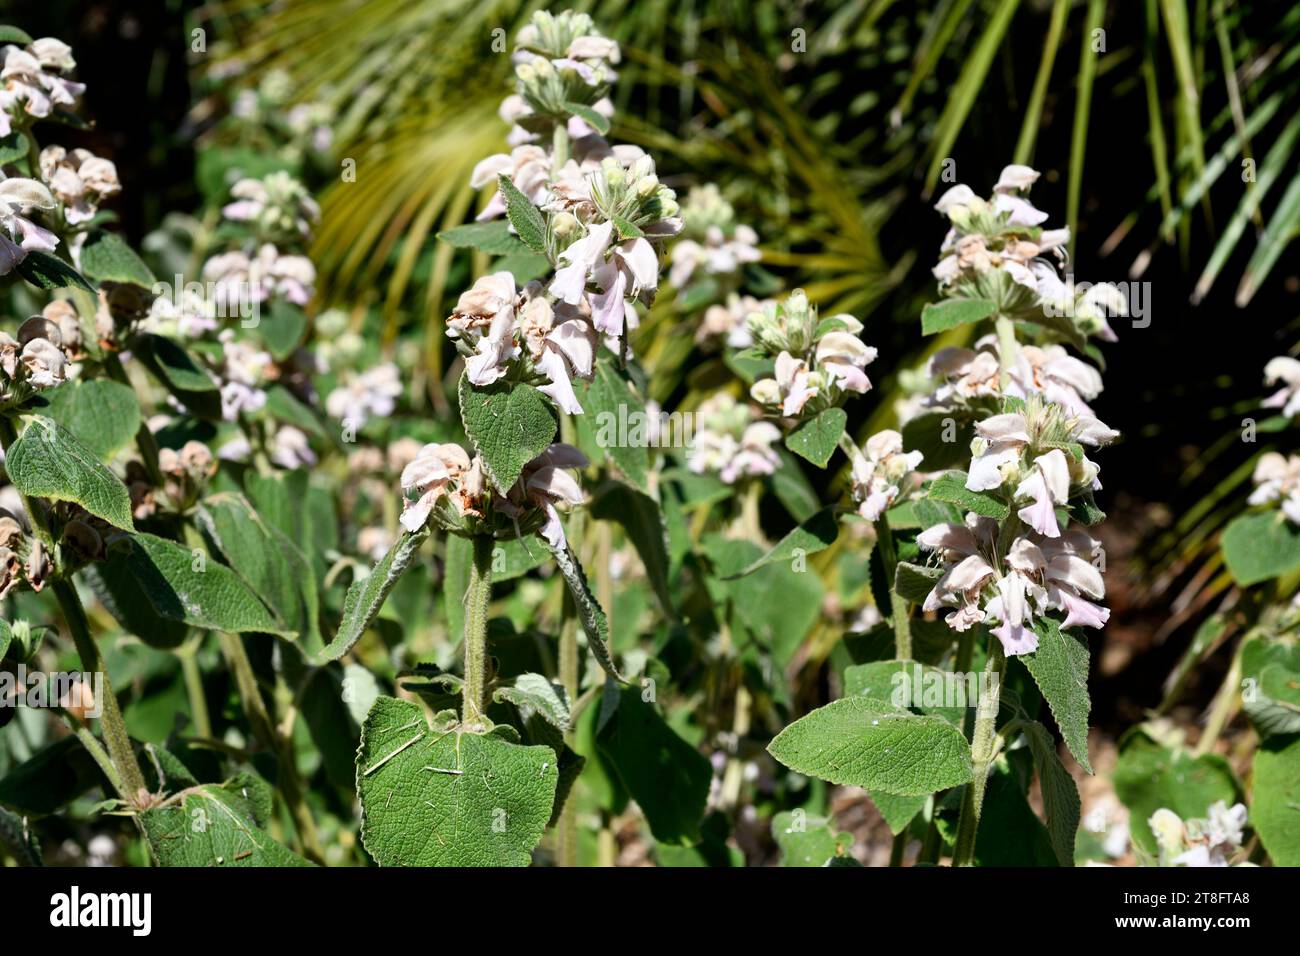 Morocco sage (Phlomis maroccana or Phlomis bovei maroccana) is an evergreen subshrub endemic to Morocco. Flowering plant. Stock Photo